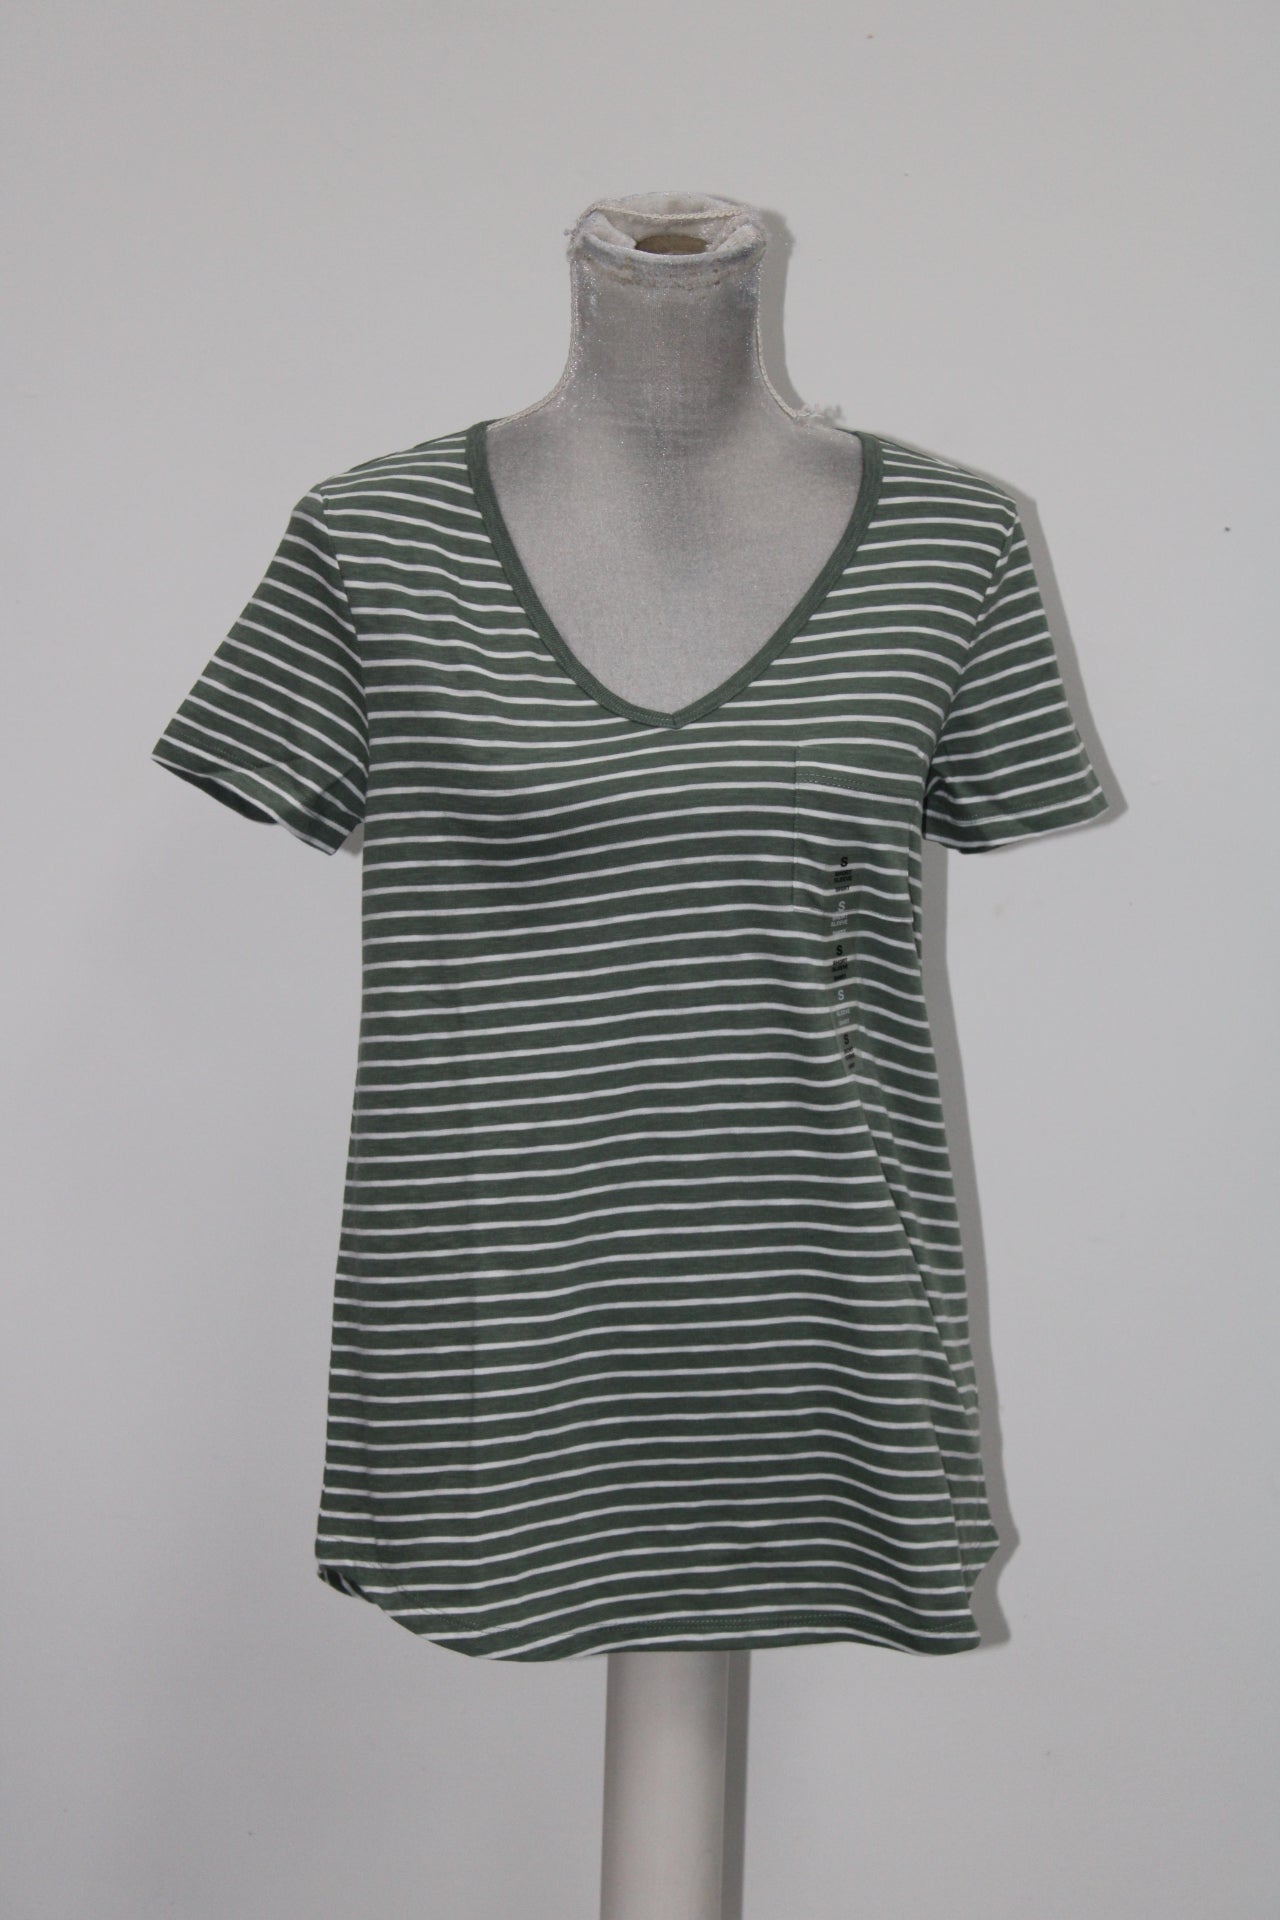 Style Co Striped T-Shirt New Pale SageWhite XS